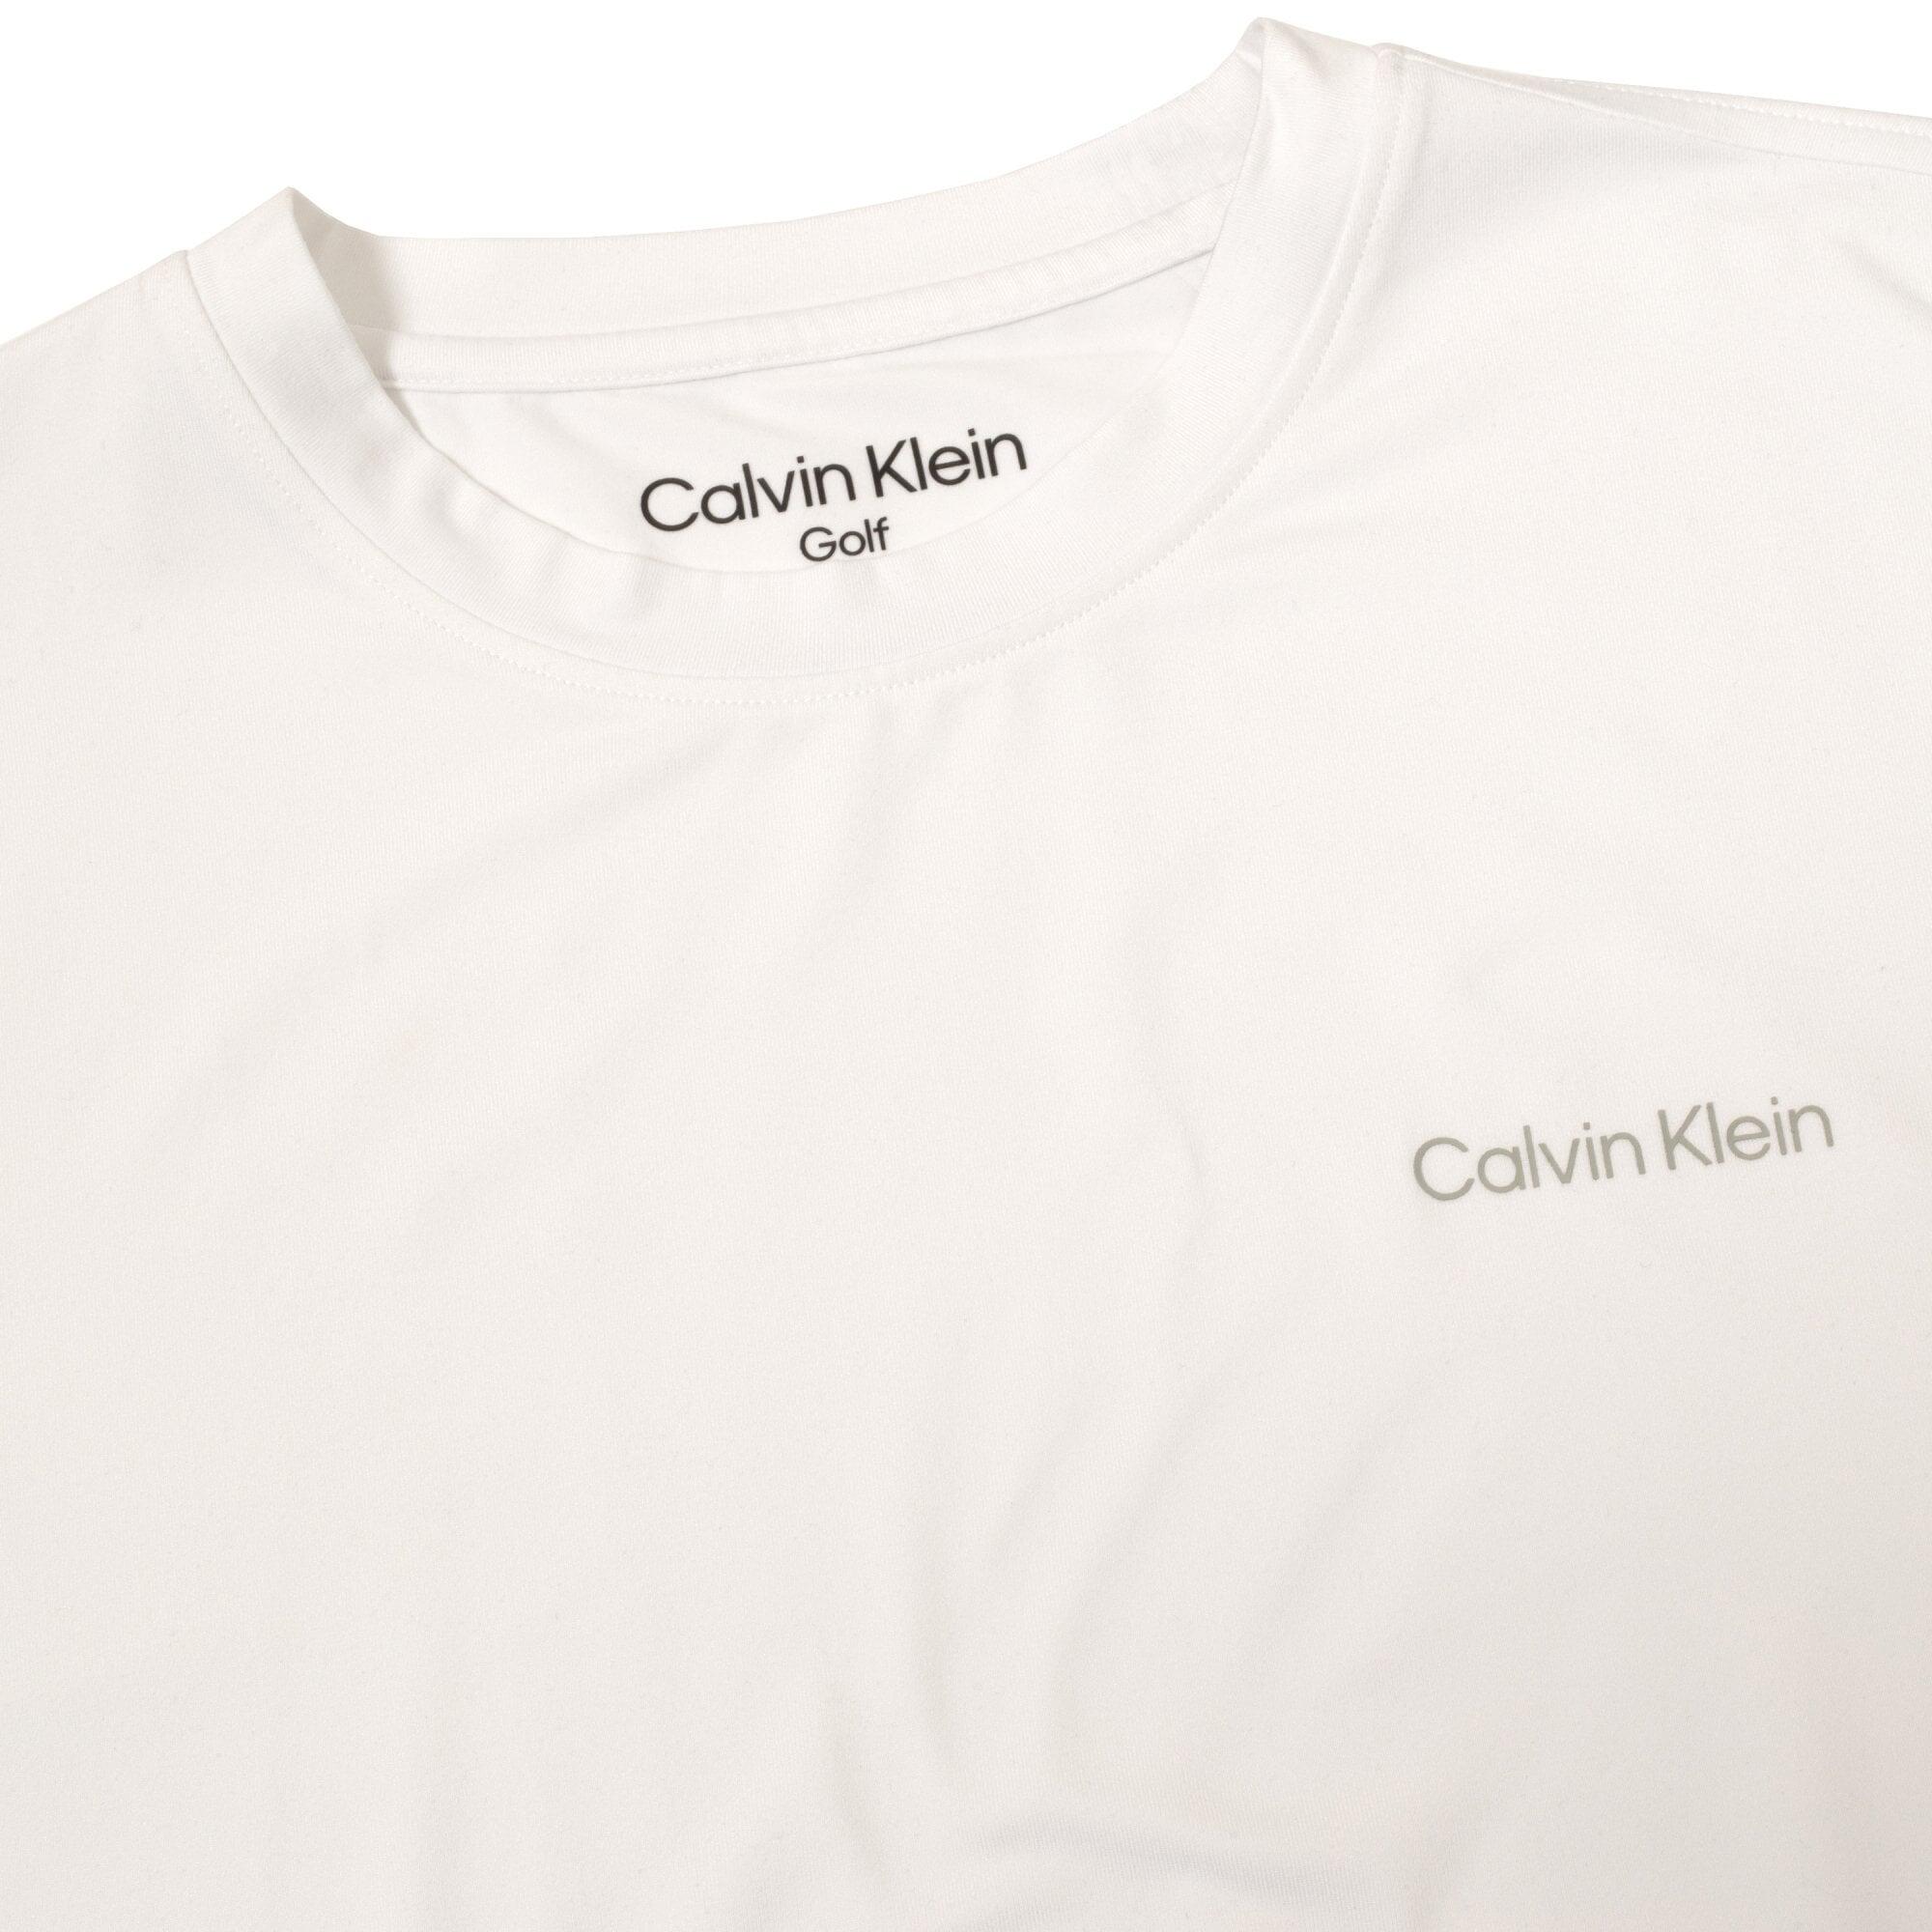 Calvin Klein NEWPORT T-SHIRT WHITE 3/6